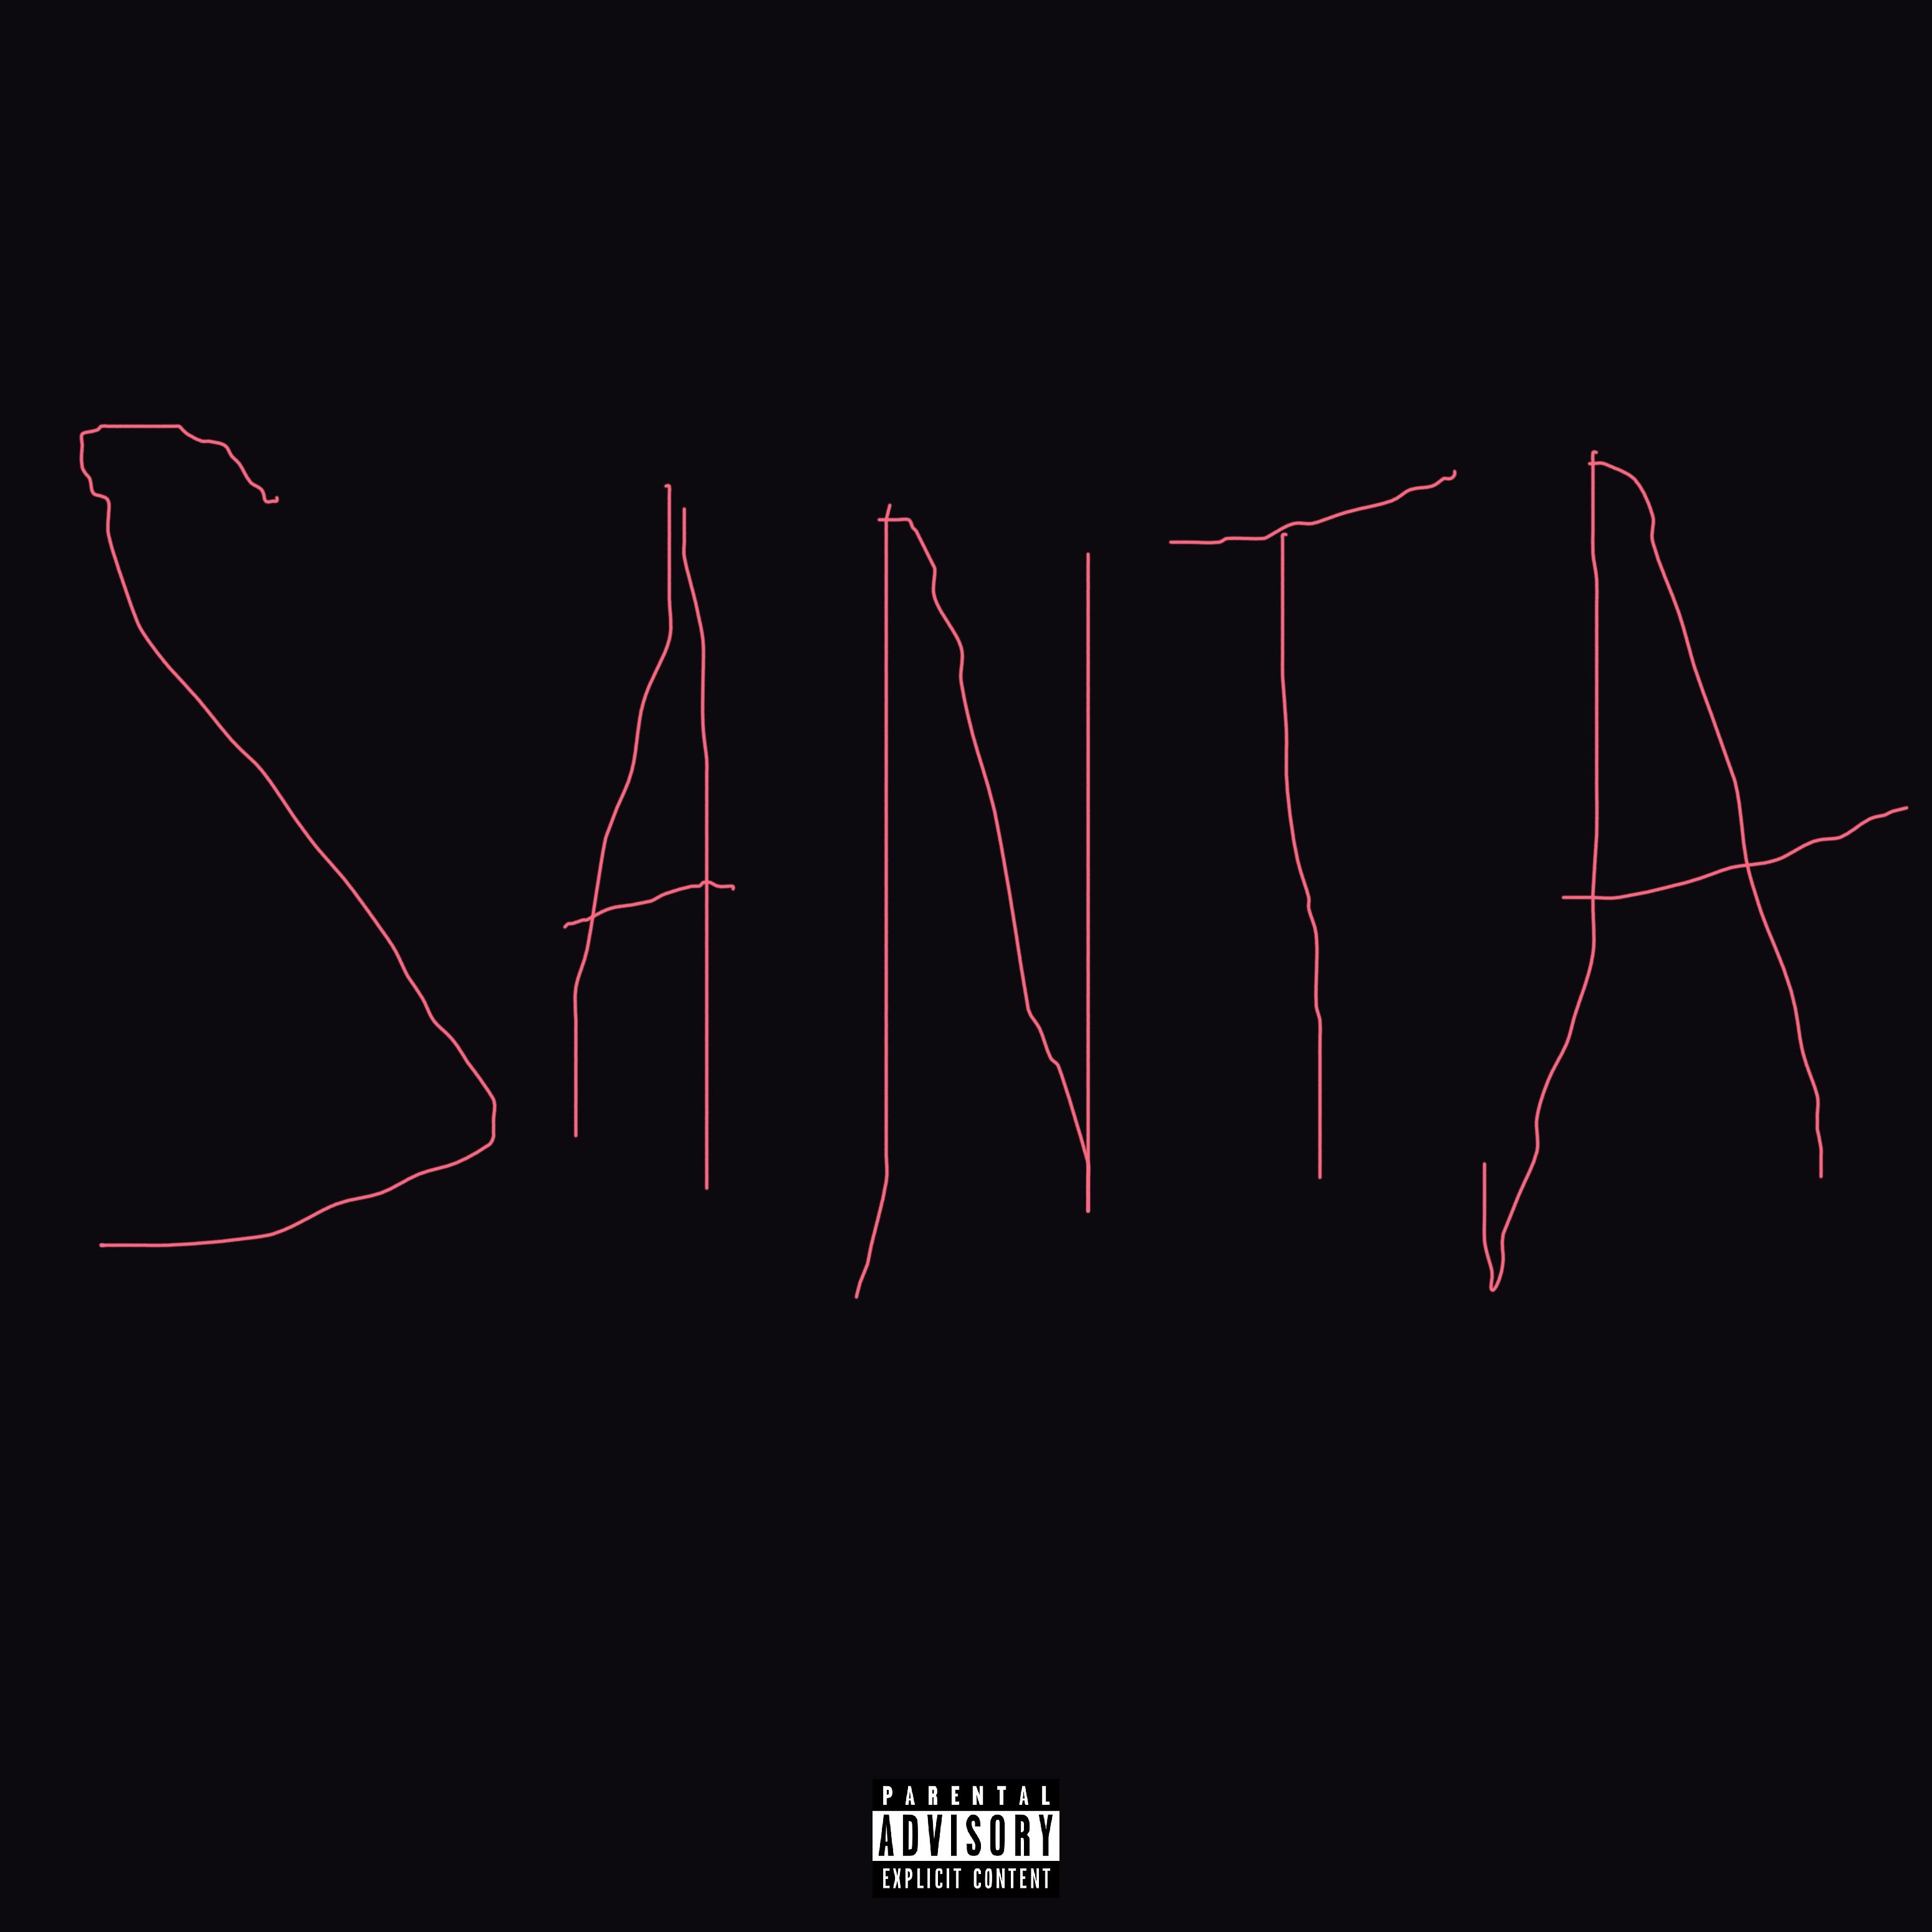 Постер альбома Santa